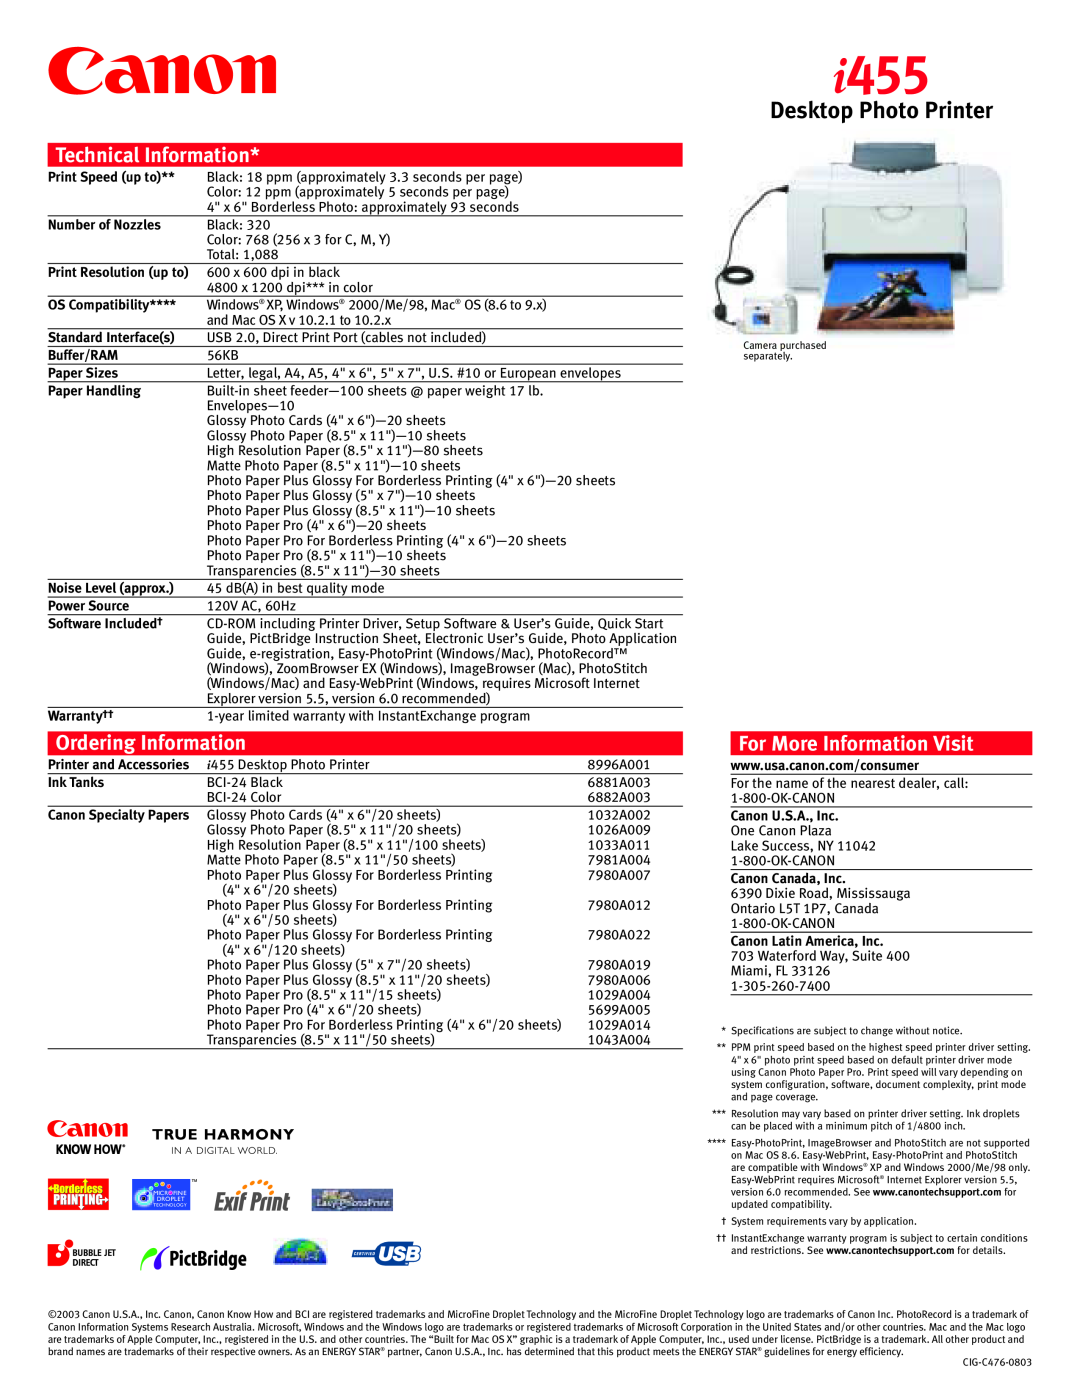 Canon manual i455, Desktop Photo Printer, Technical Information, Ordering Information, For More Information Visit 